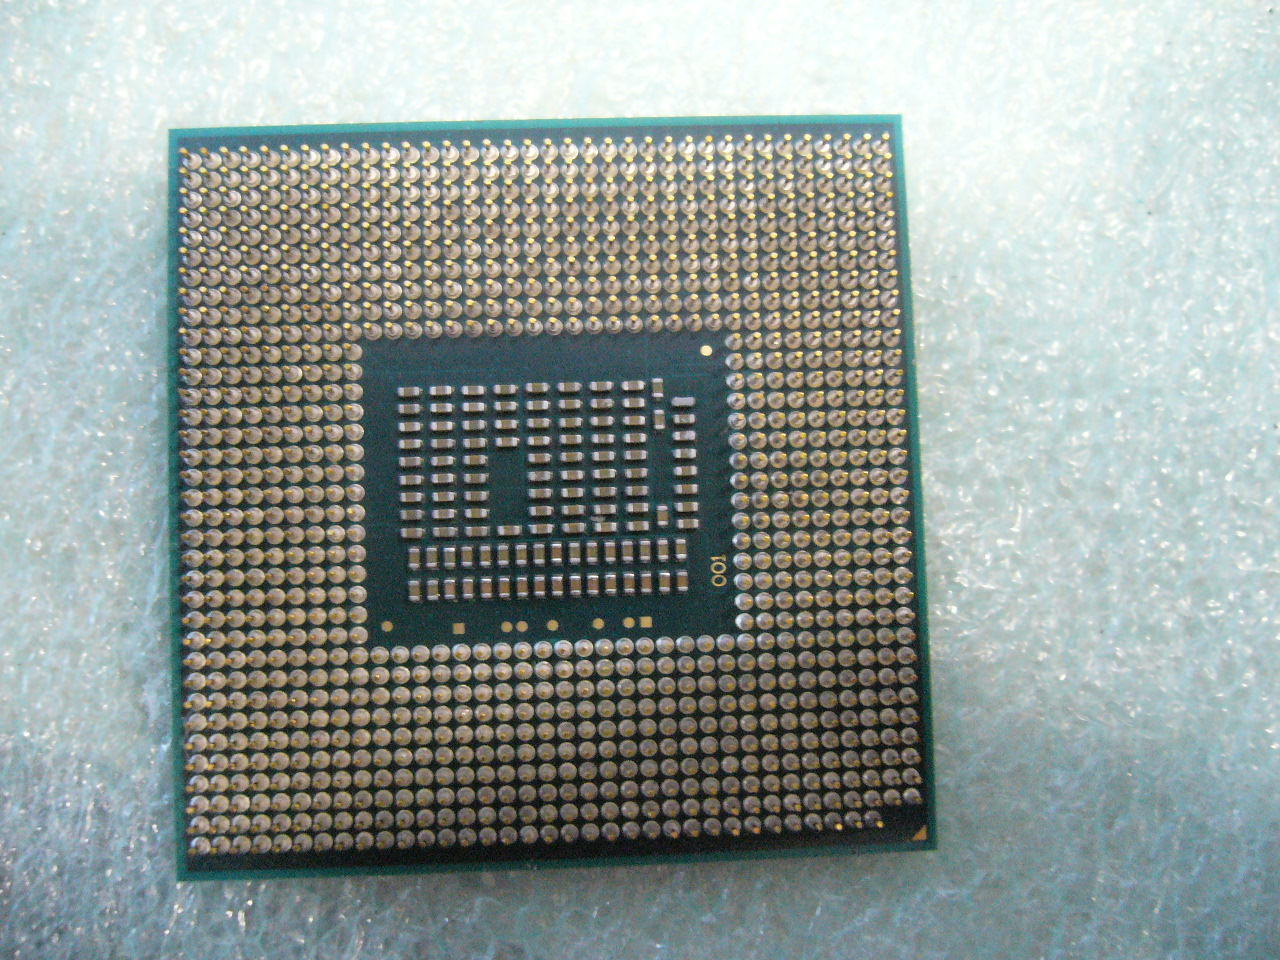 QTY 1x Intel CPU i5-3210M Dual-Core 2.5 Ghz PGA988 SR0MZ Socket G2 NOT WORKING - Click Image to Close